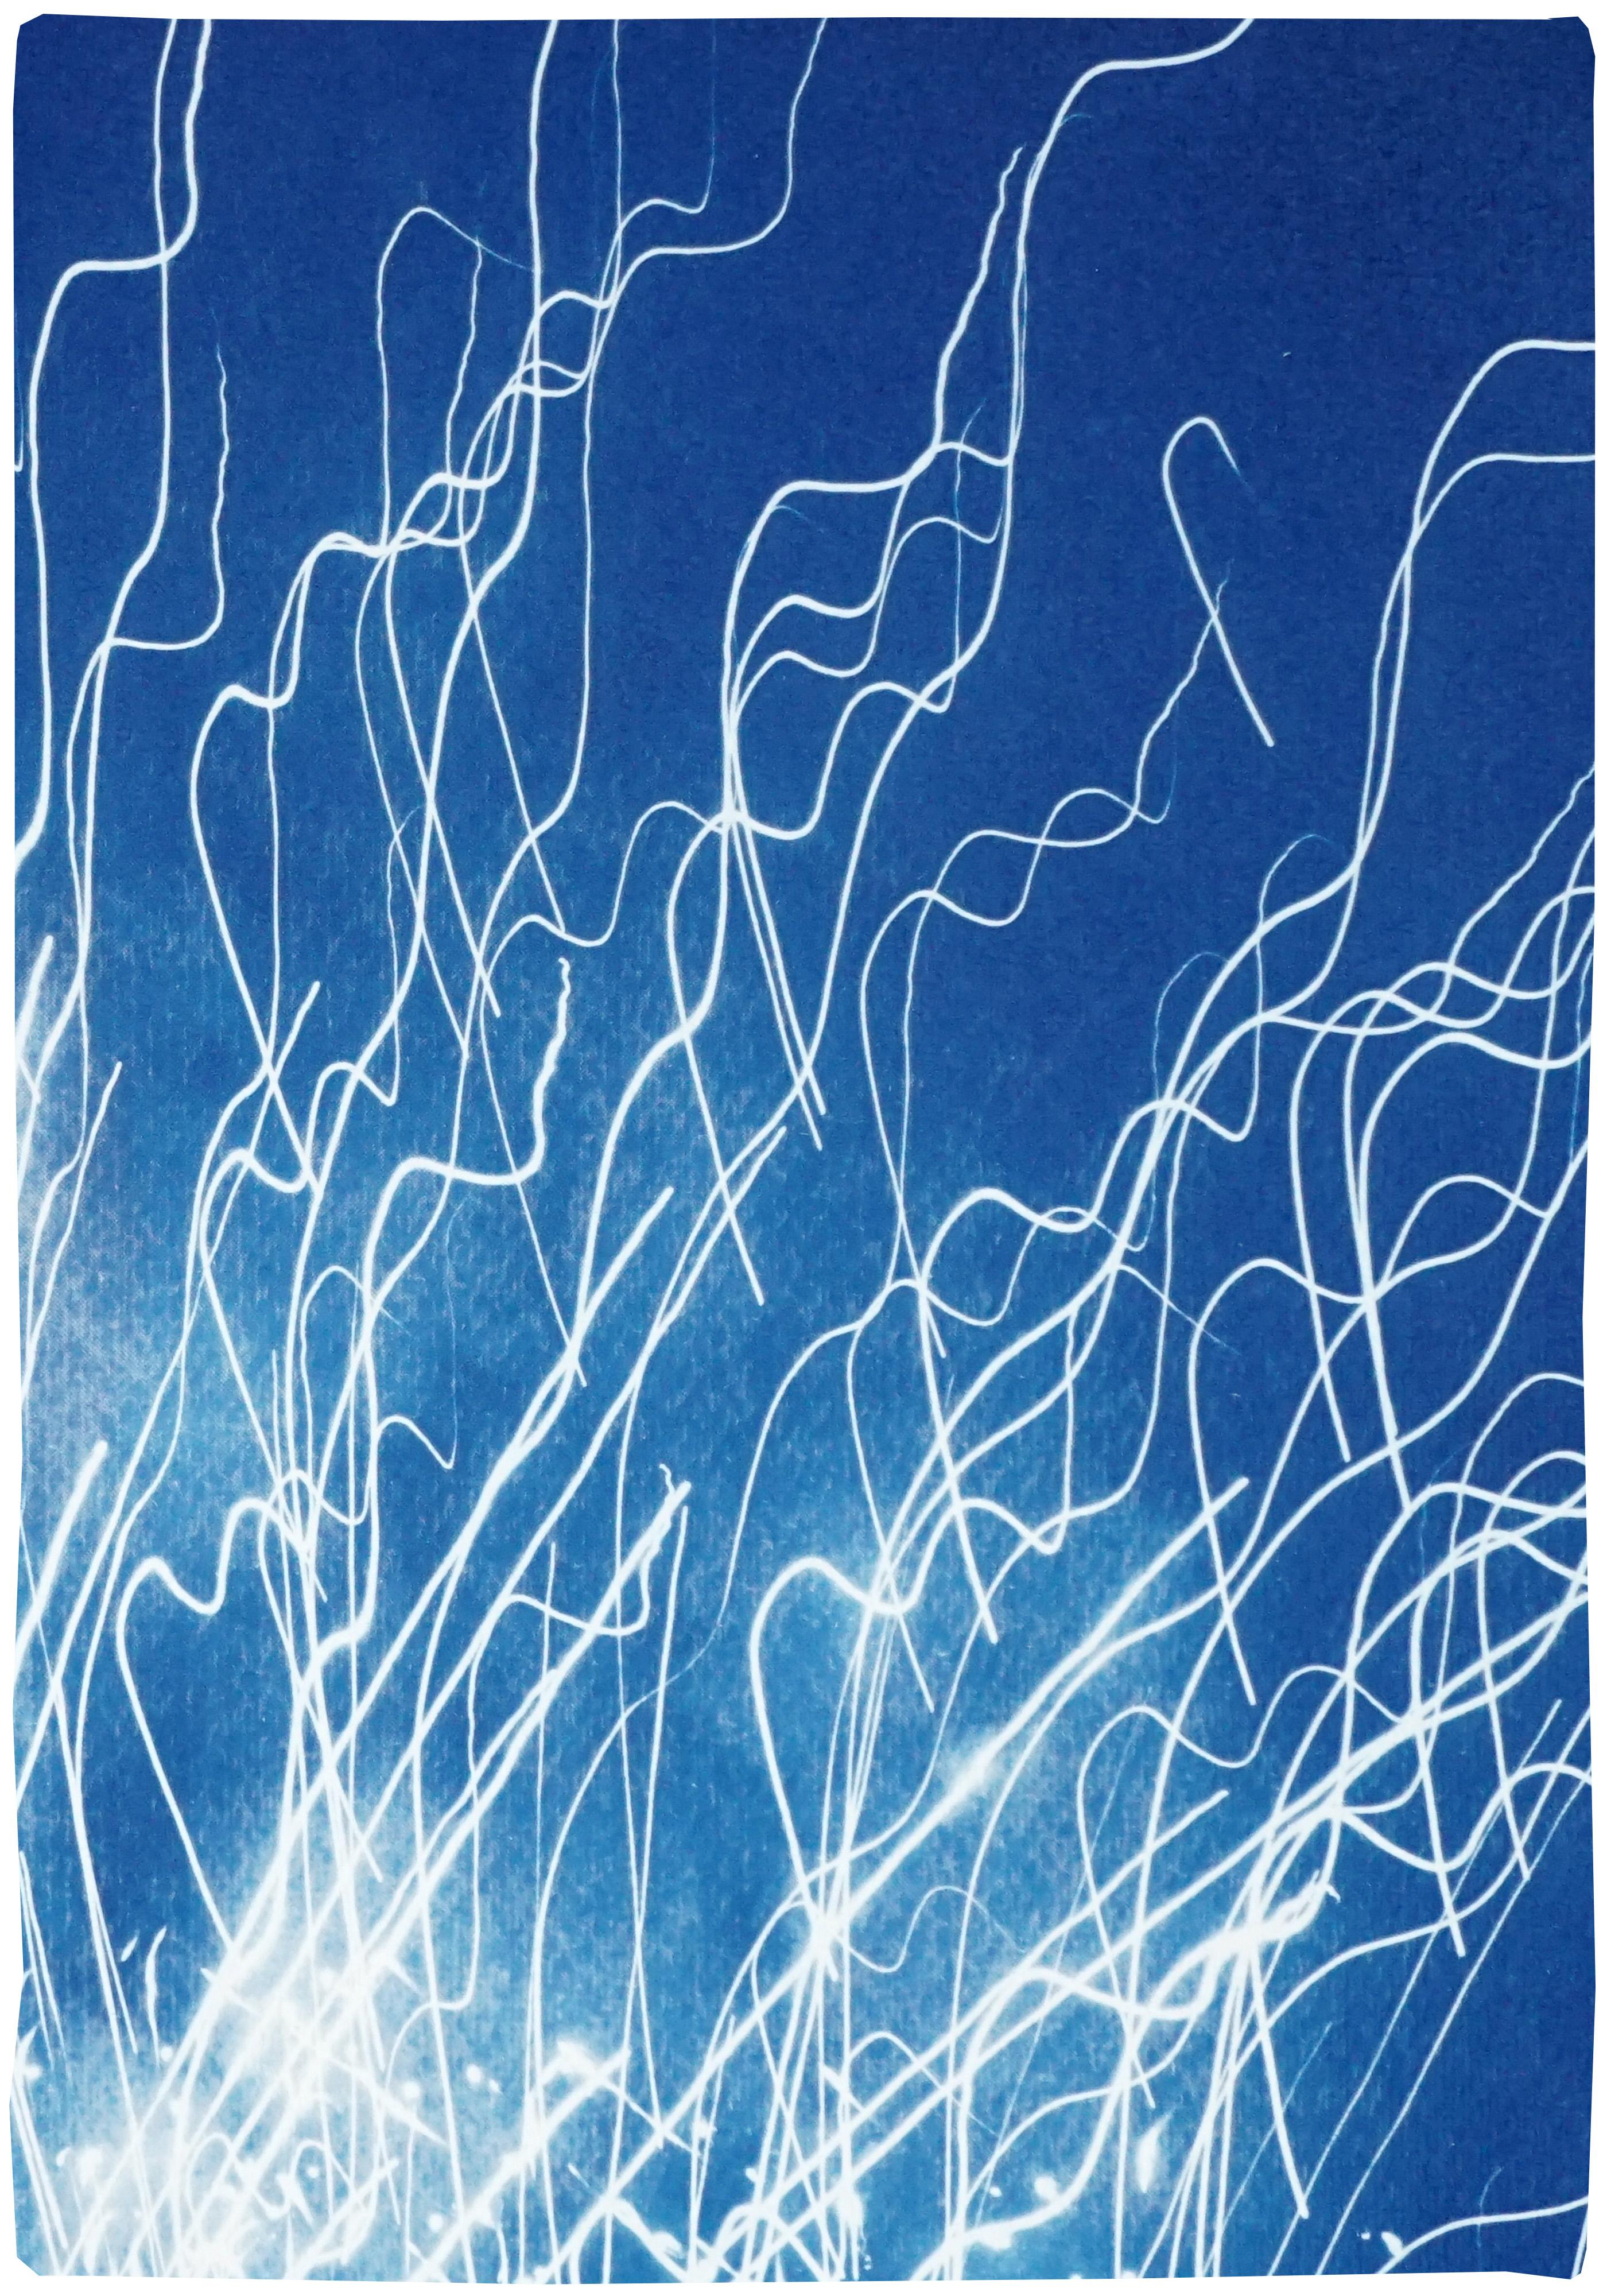 Fireworks Lights in Sky Blue Diptych, Handmade Cyanotype on Watercolor Paper,  1